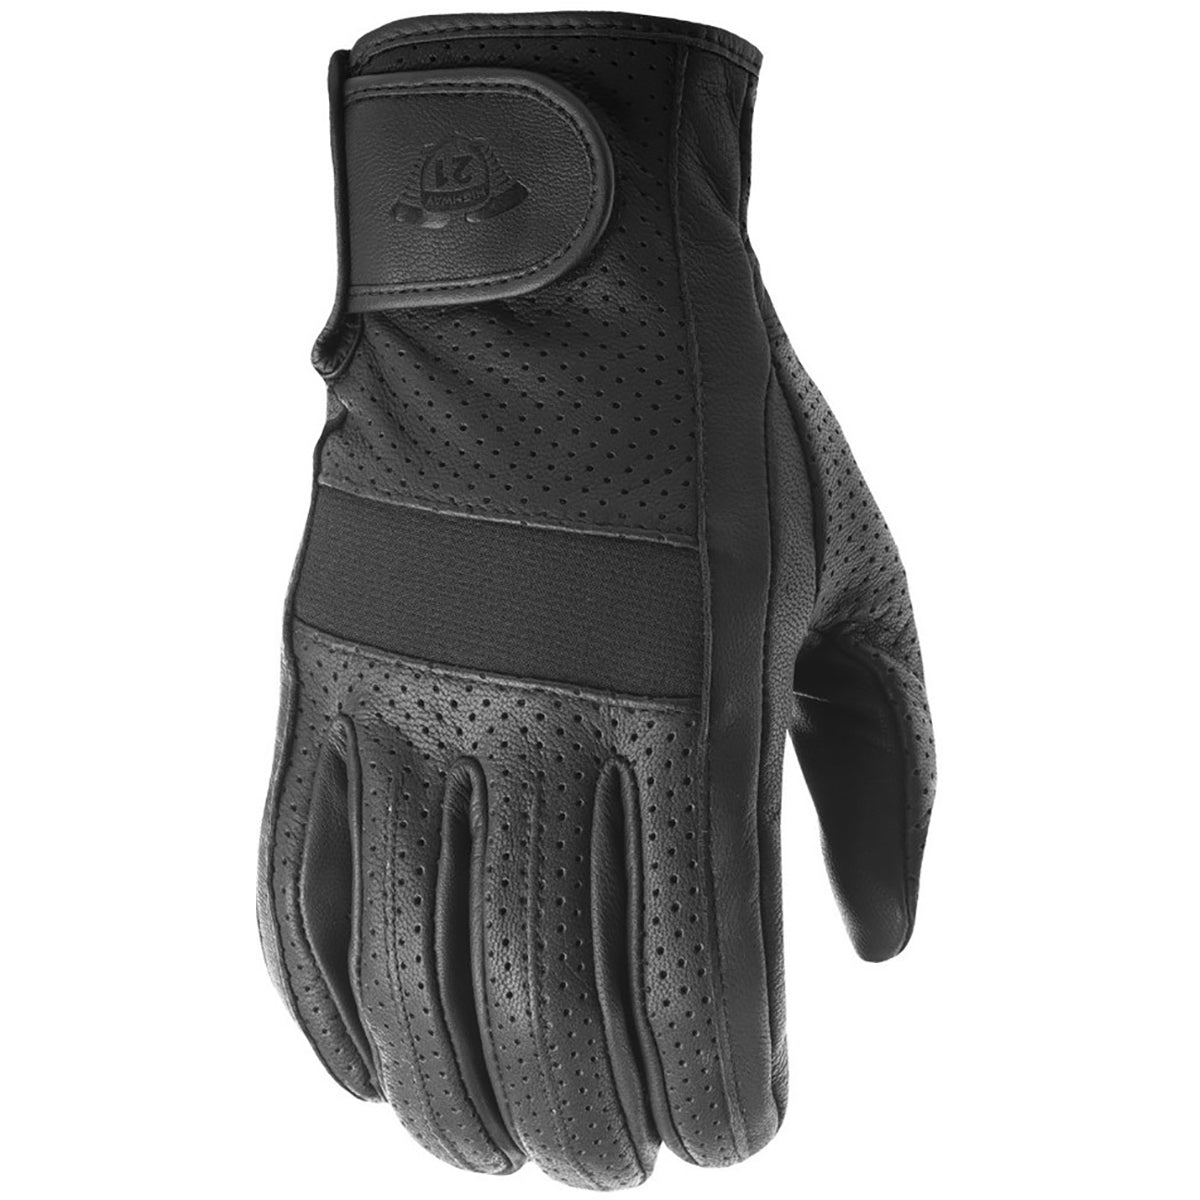 Highway 21 Jab Perforated Men's Street Gloves-489-0017S